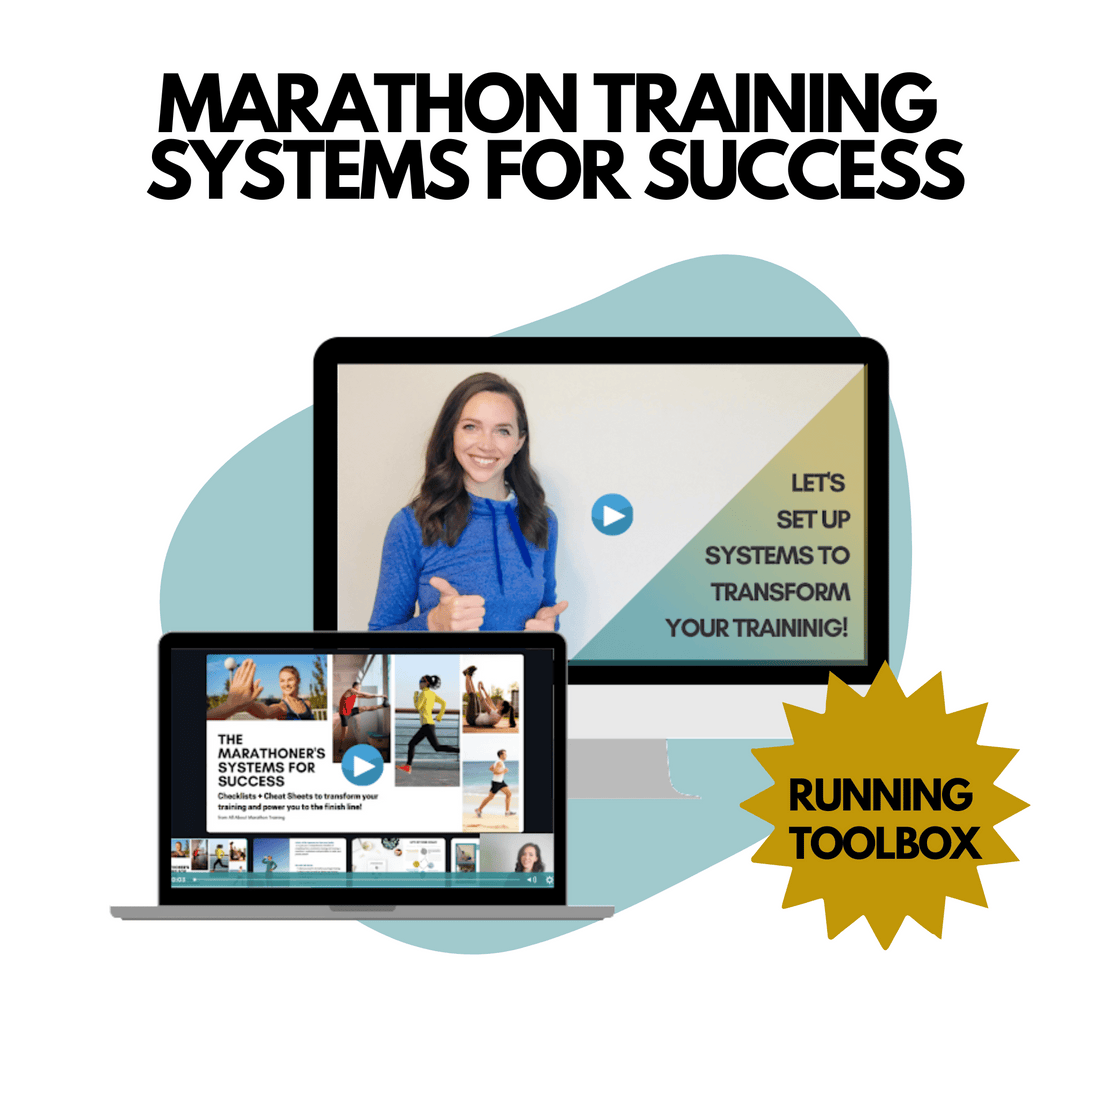 Mockup of the Marathon Training Systems for Success Marathon Training Guide